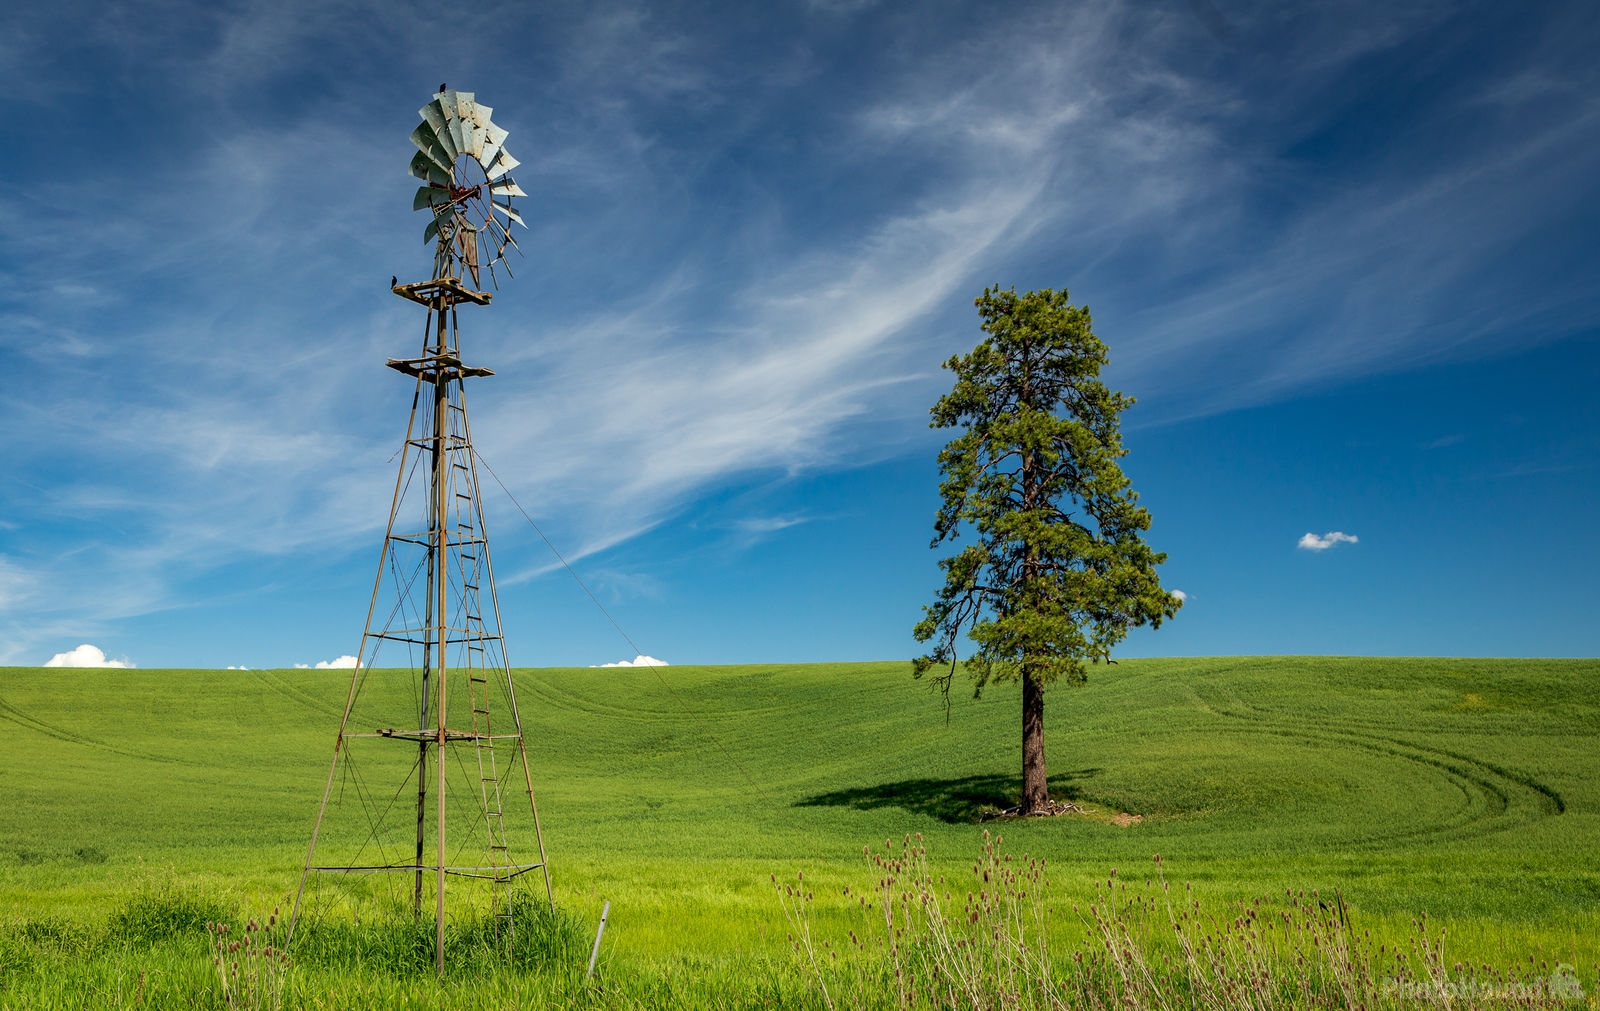 Image of B Howard Road Windmill and Lone Tree by Joe Becker